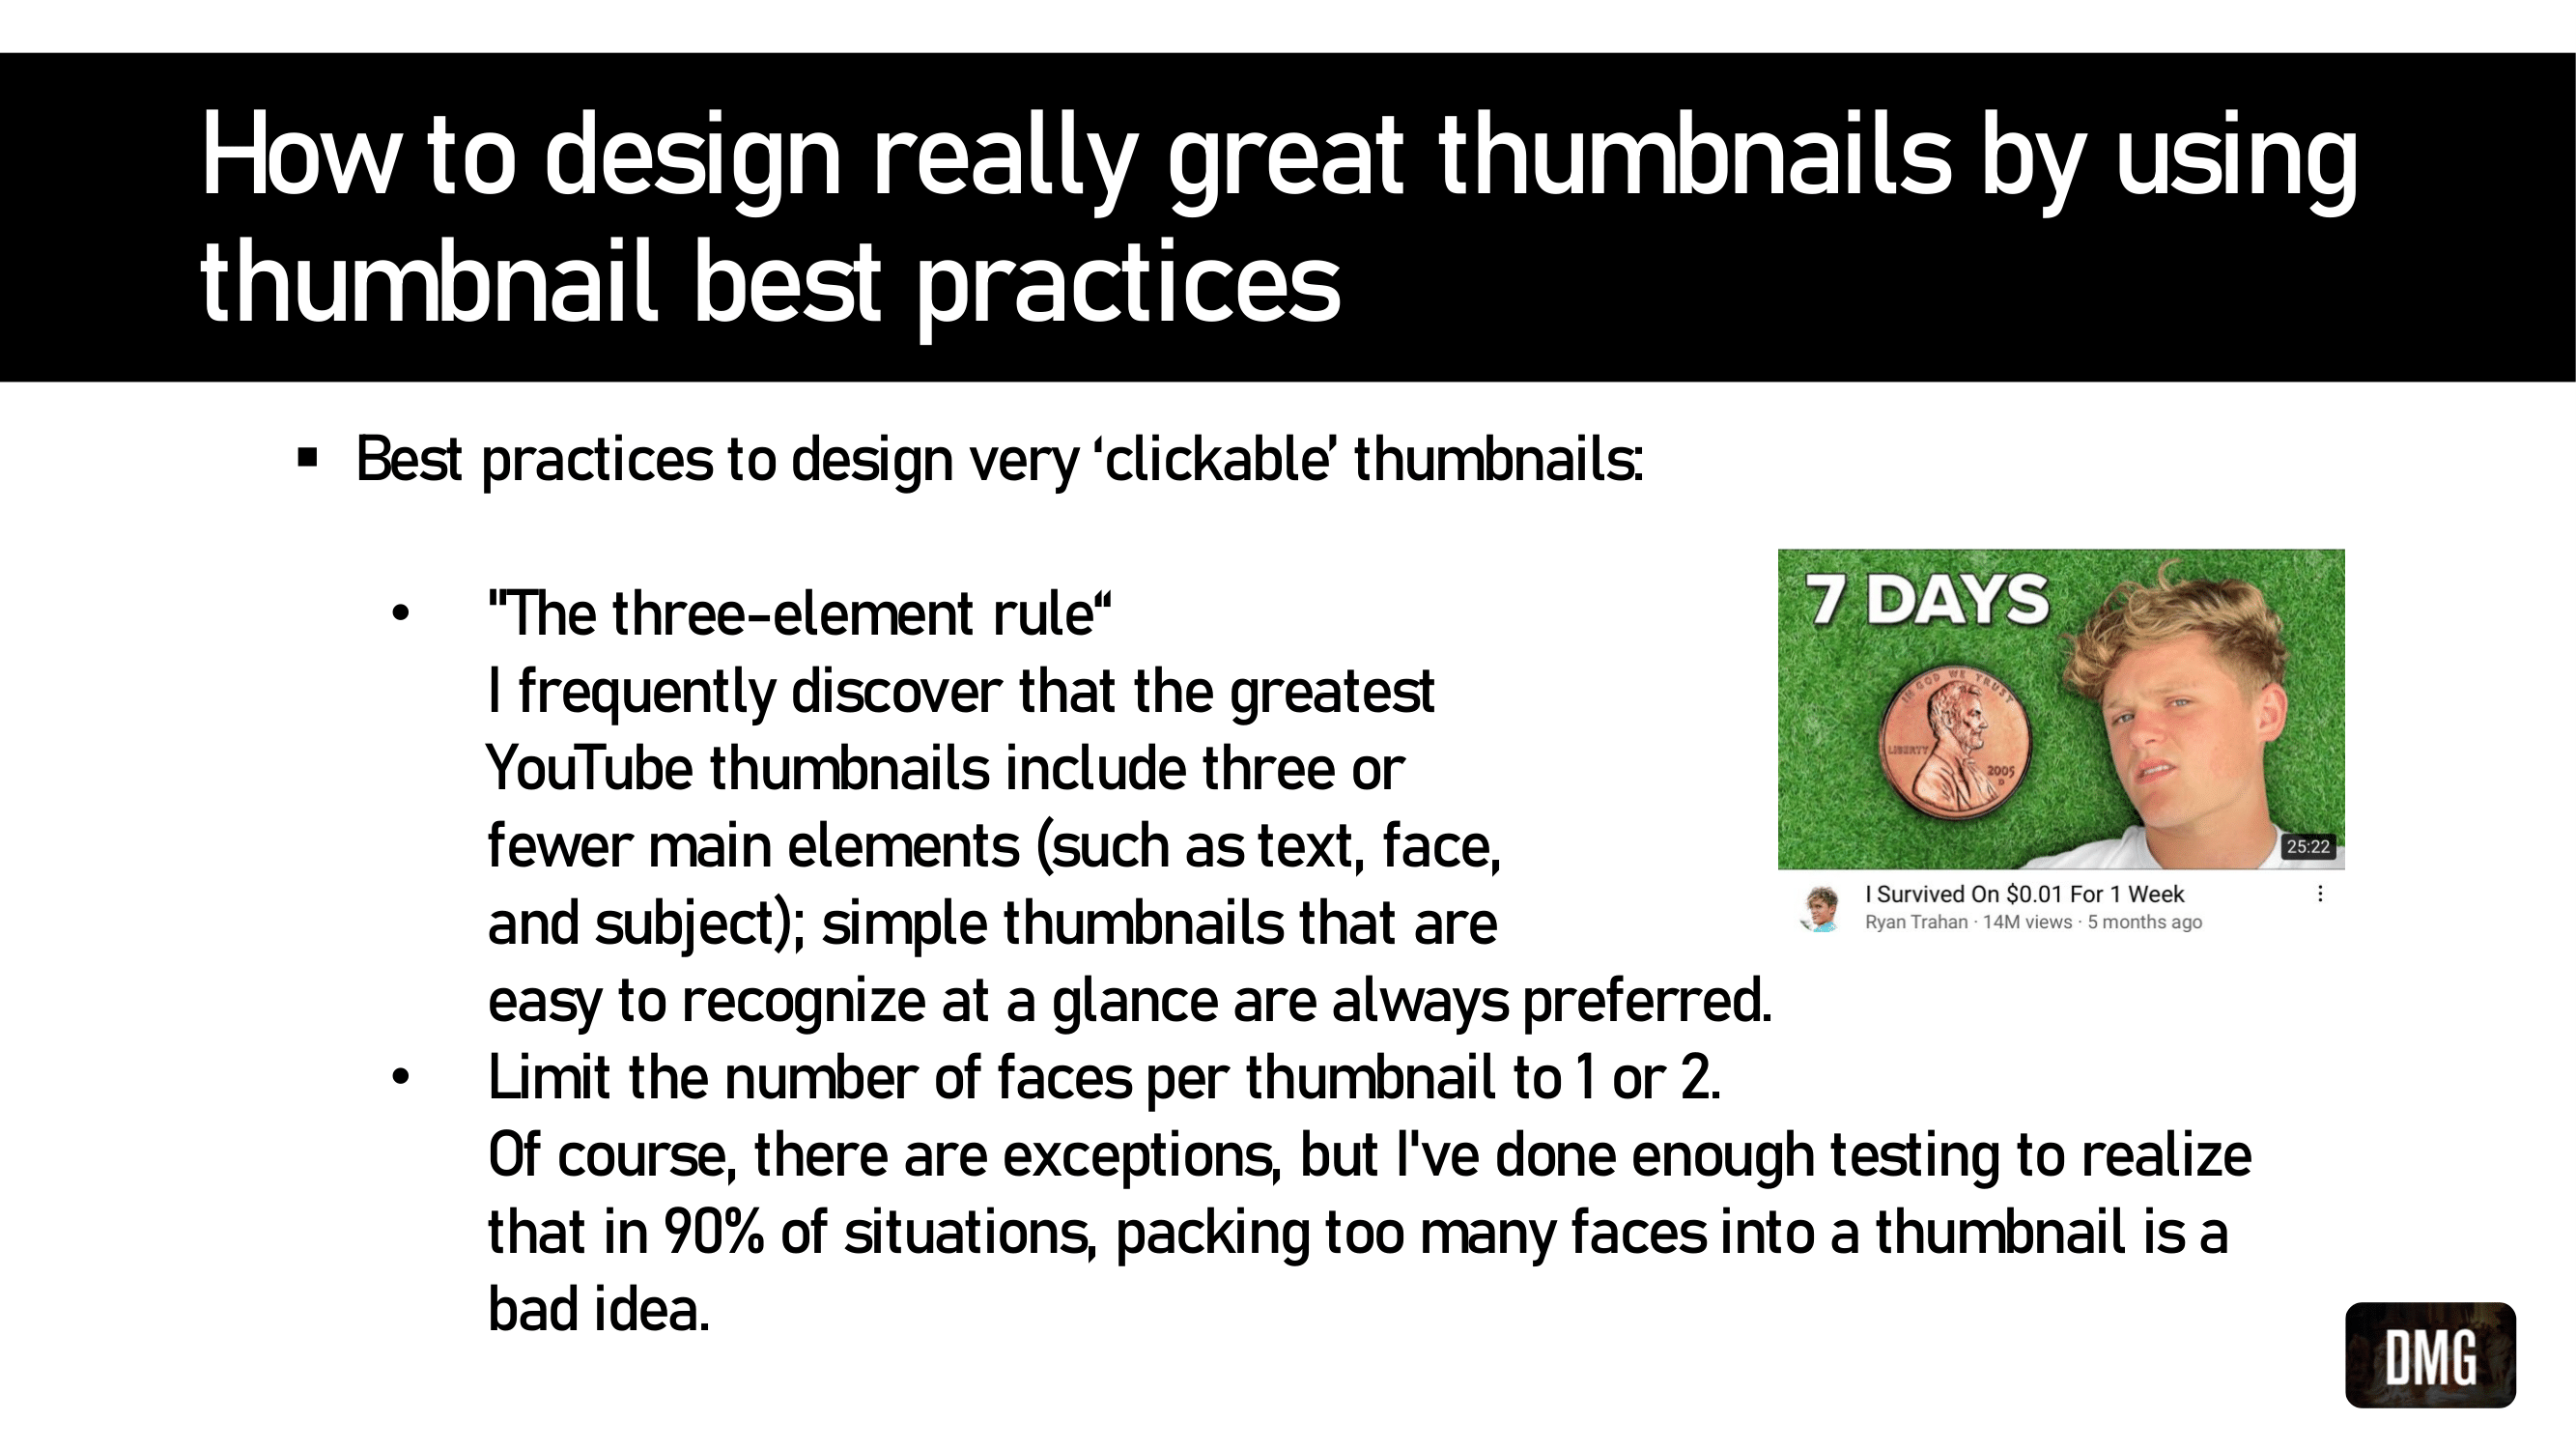 Giga University_Thumbnail design via AI-4